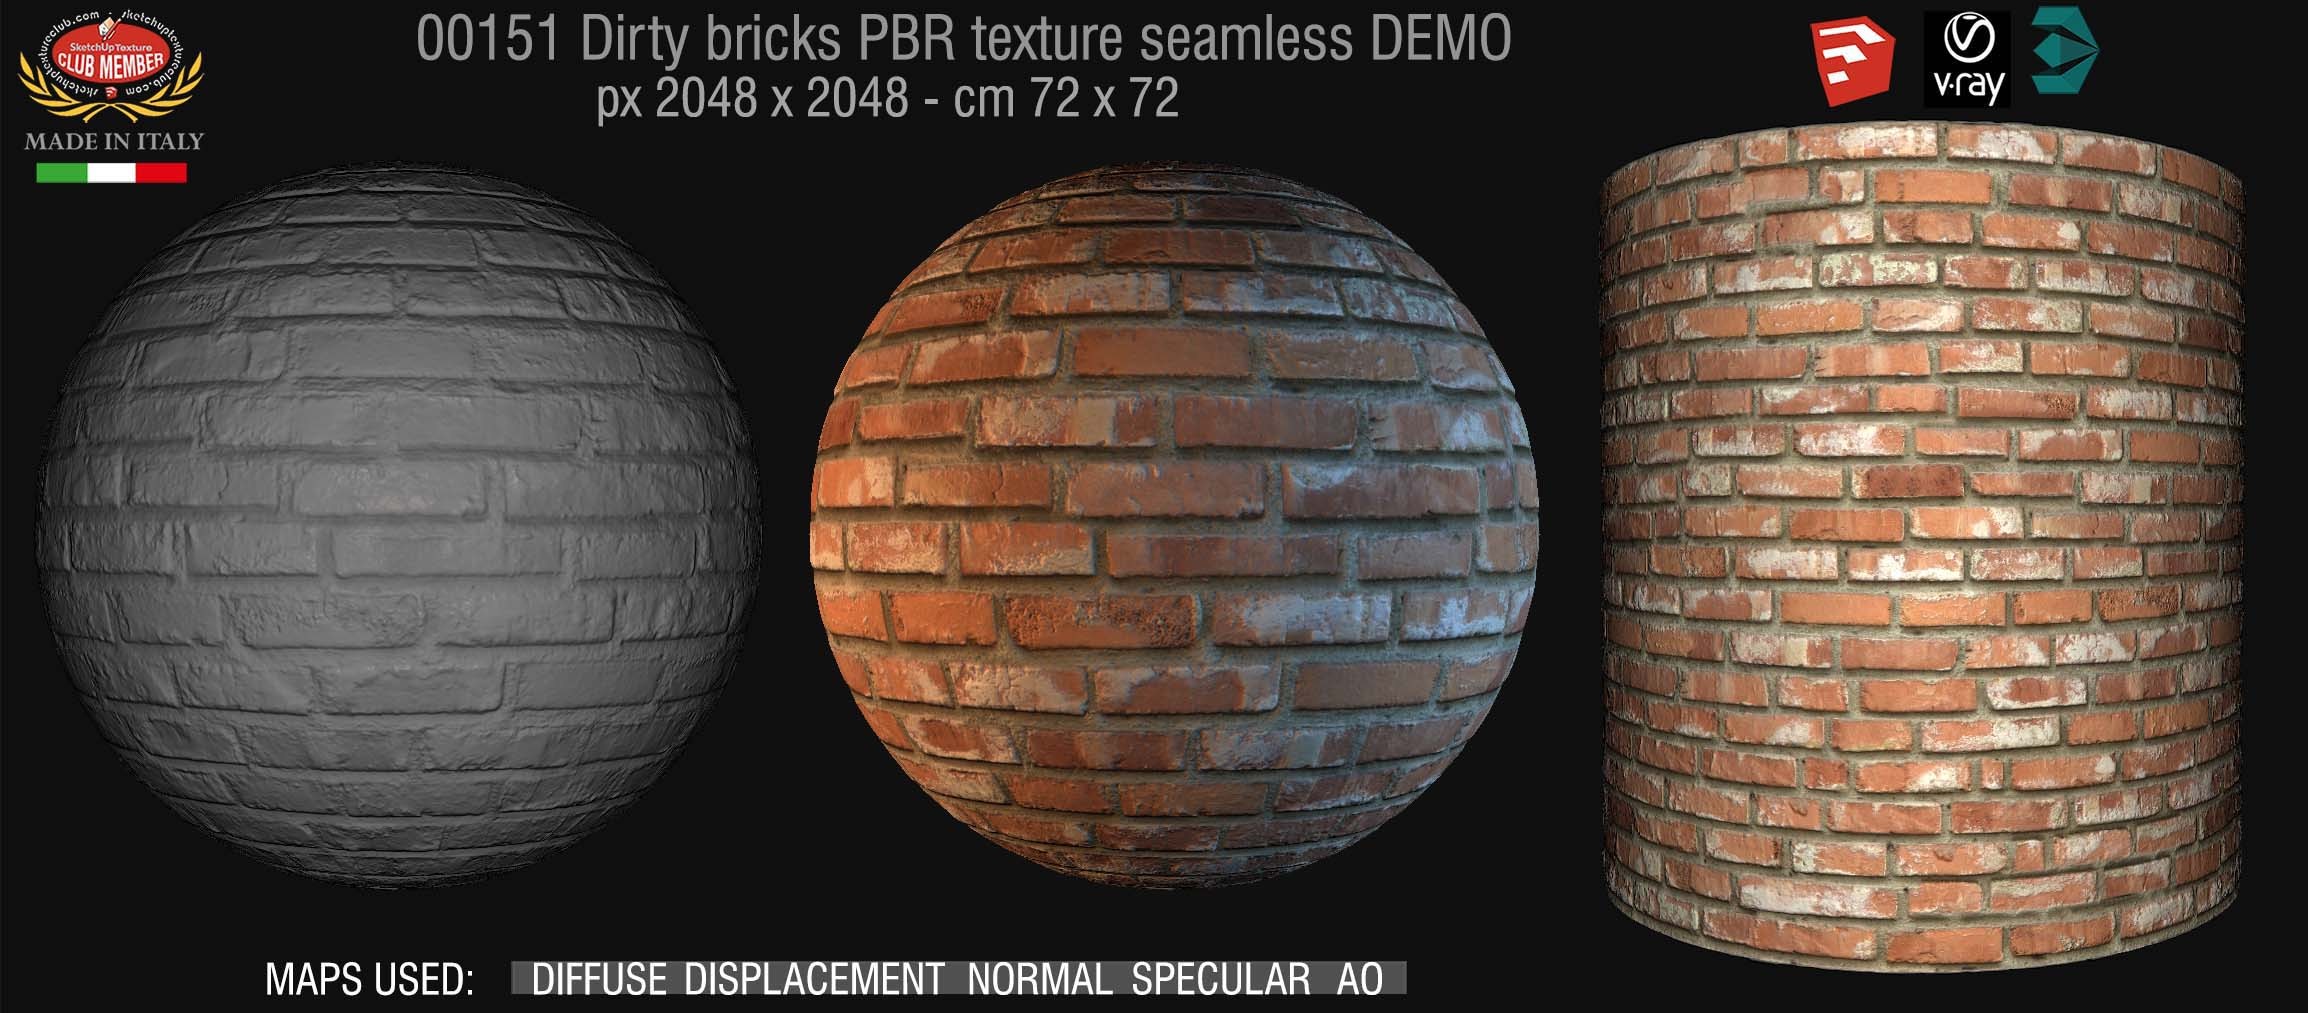 00151 Dirty bricks PBR texture seamless DEMO